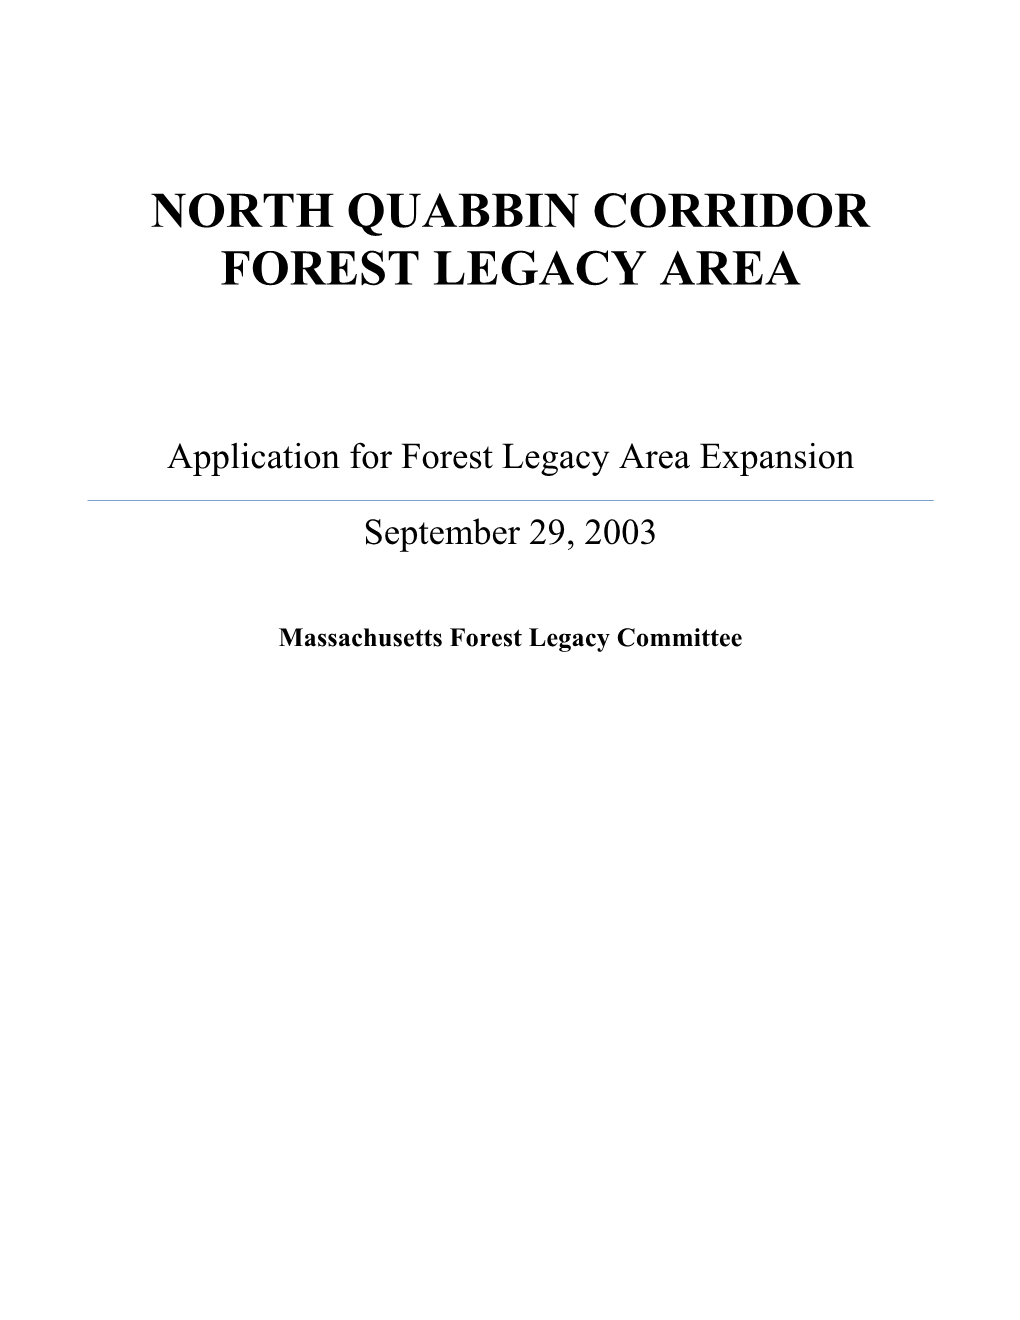 North Quabbin Corridor Forest Legacy Area